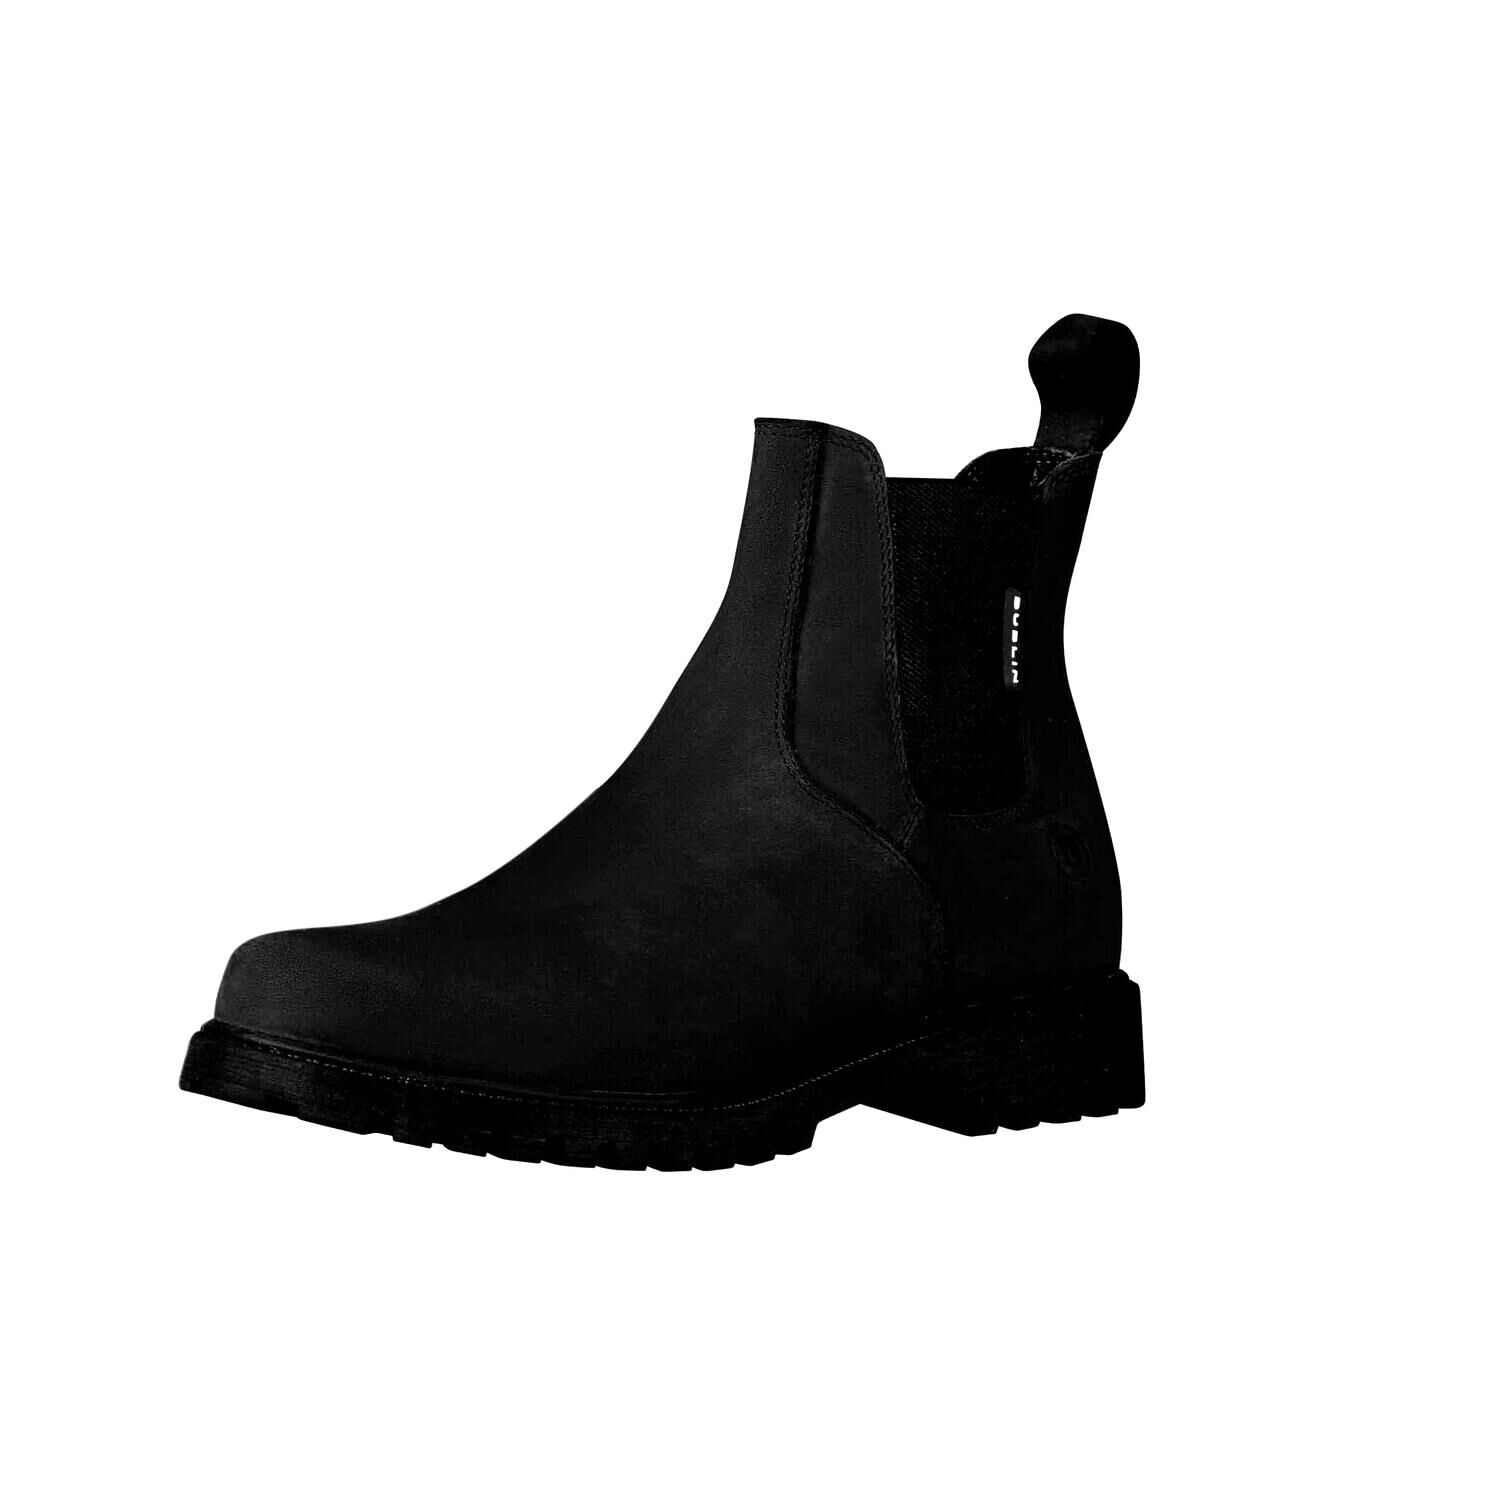 DUBLIN Mens Venturer Leather Boots III (Black)